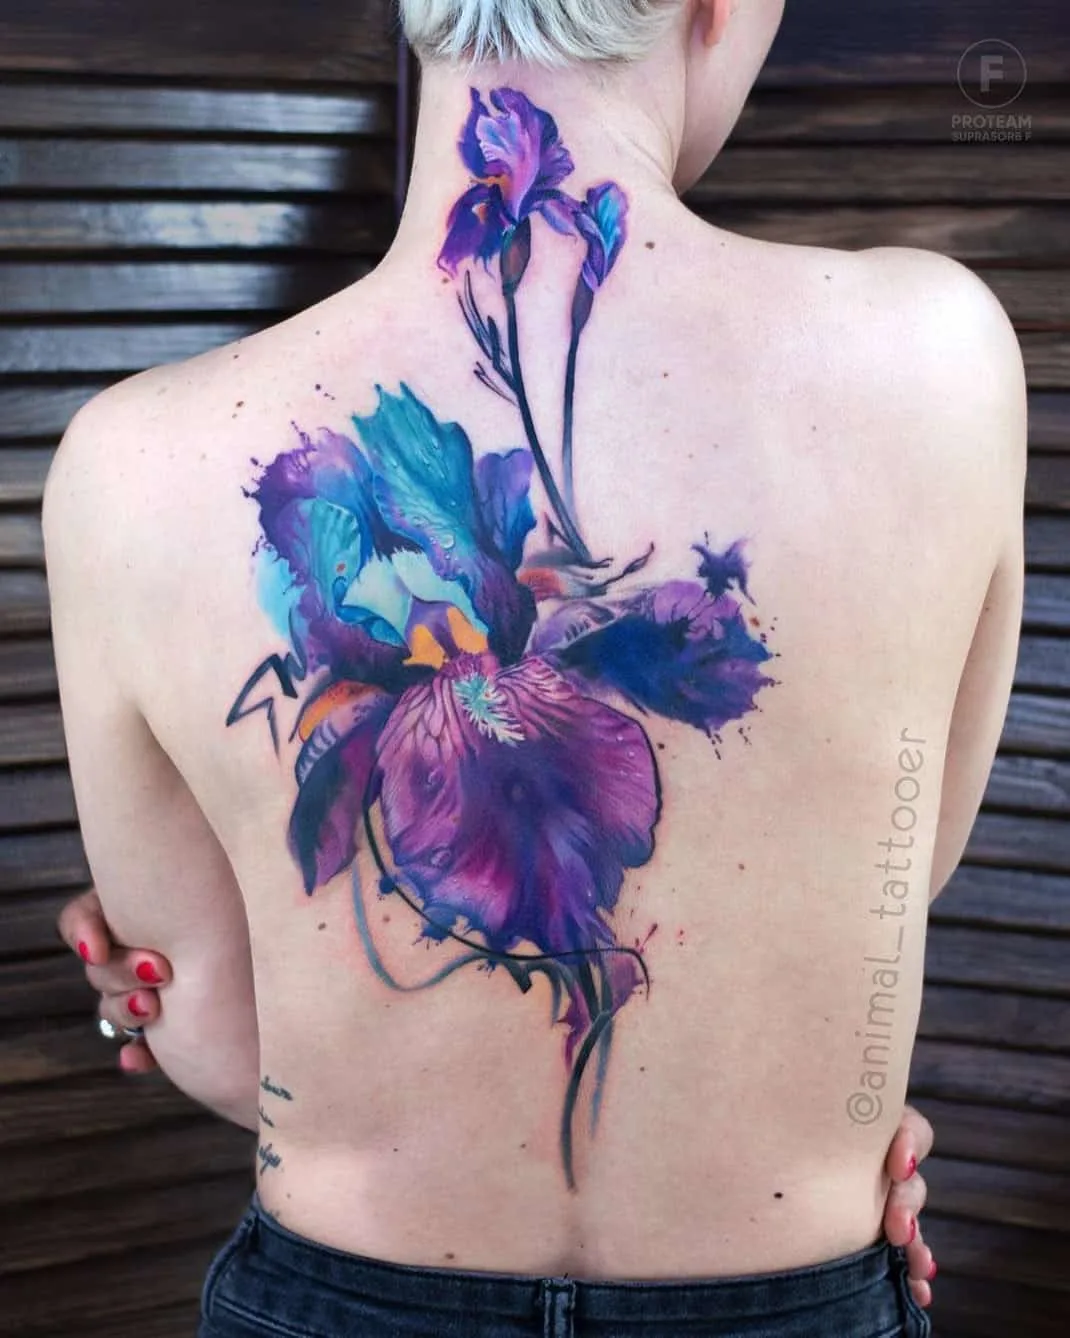 Stunning floral tattoo